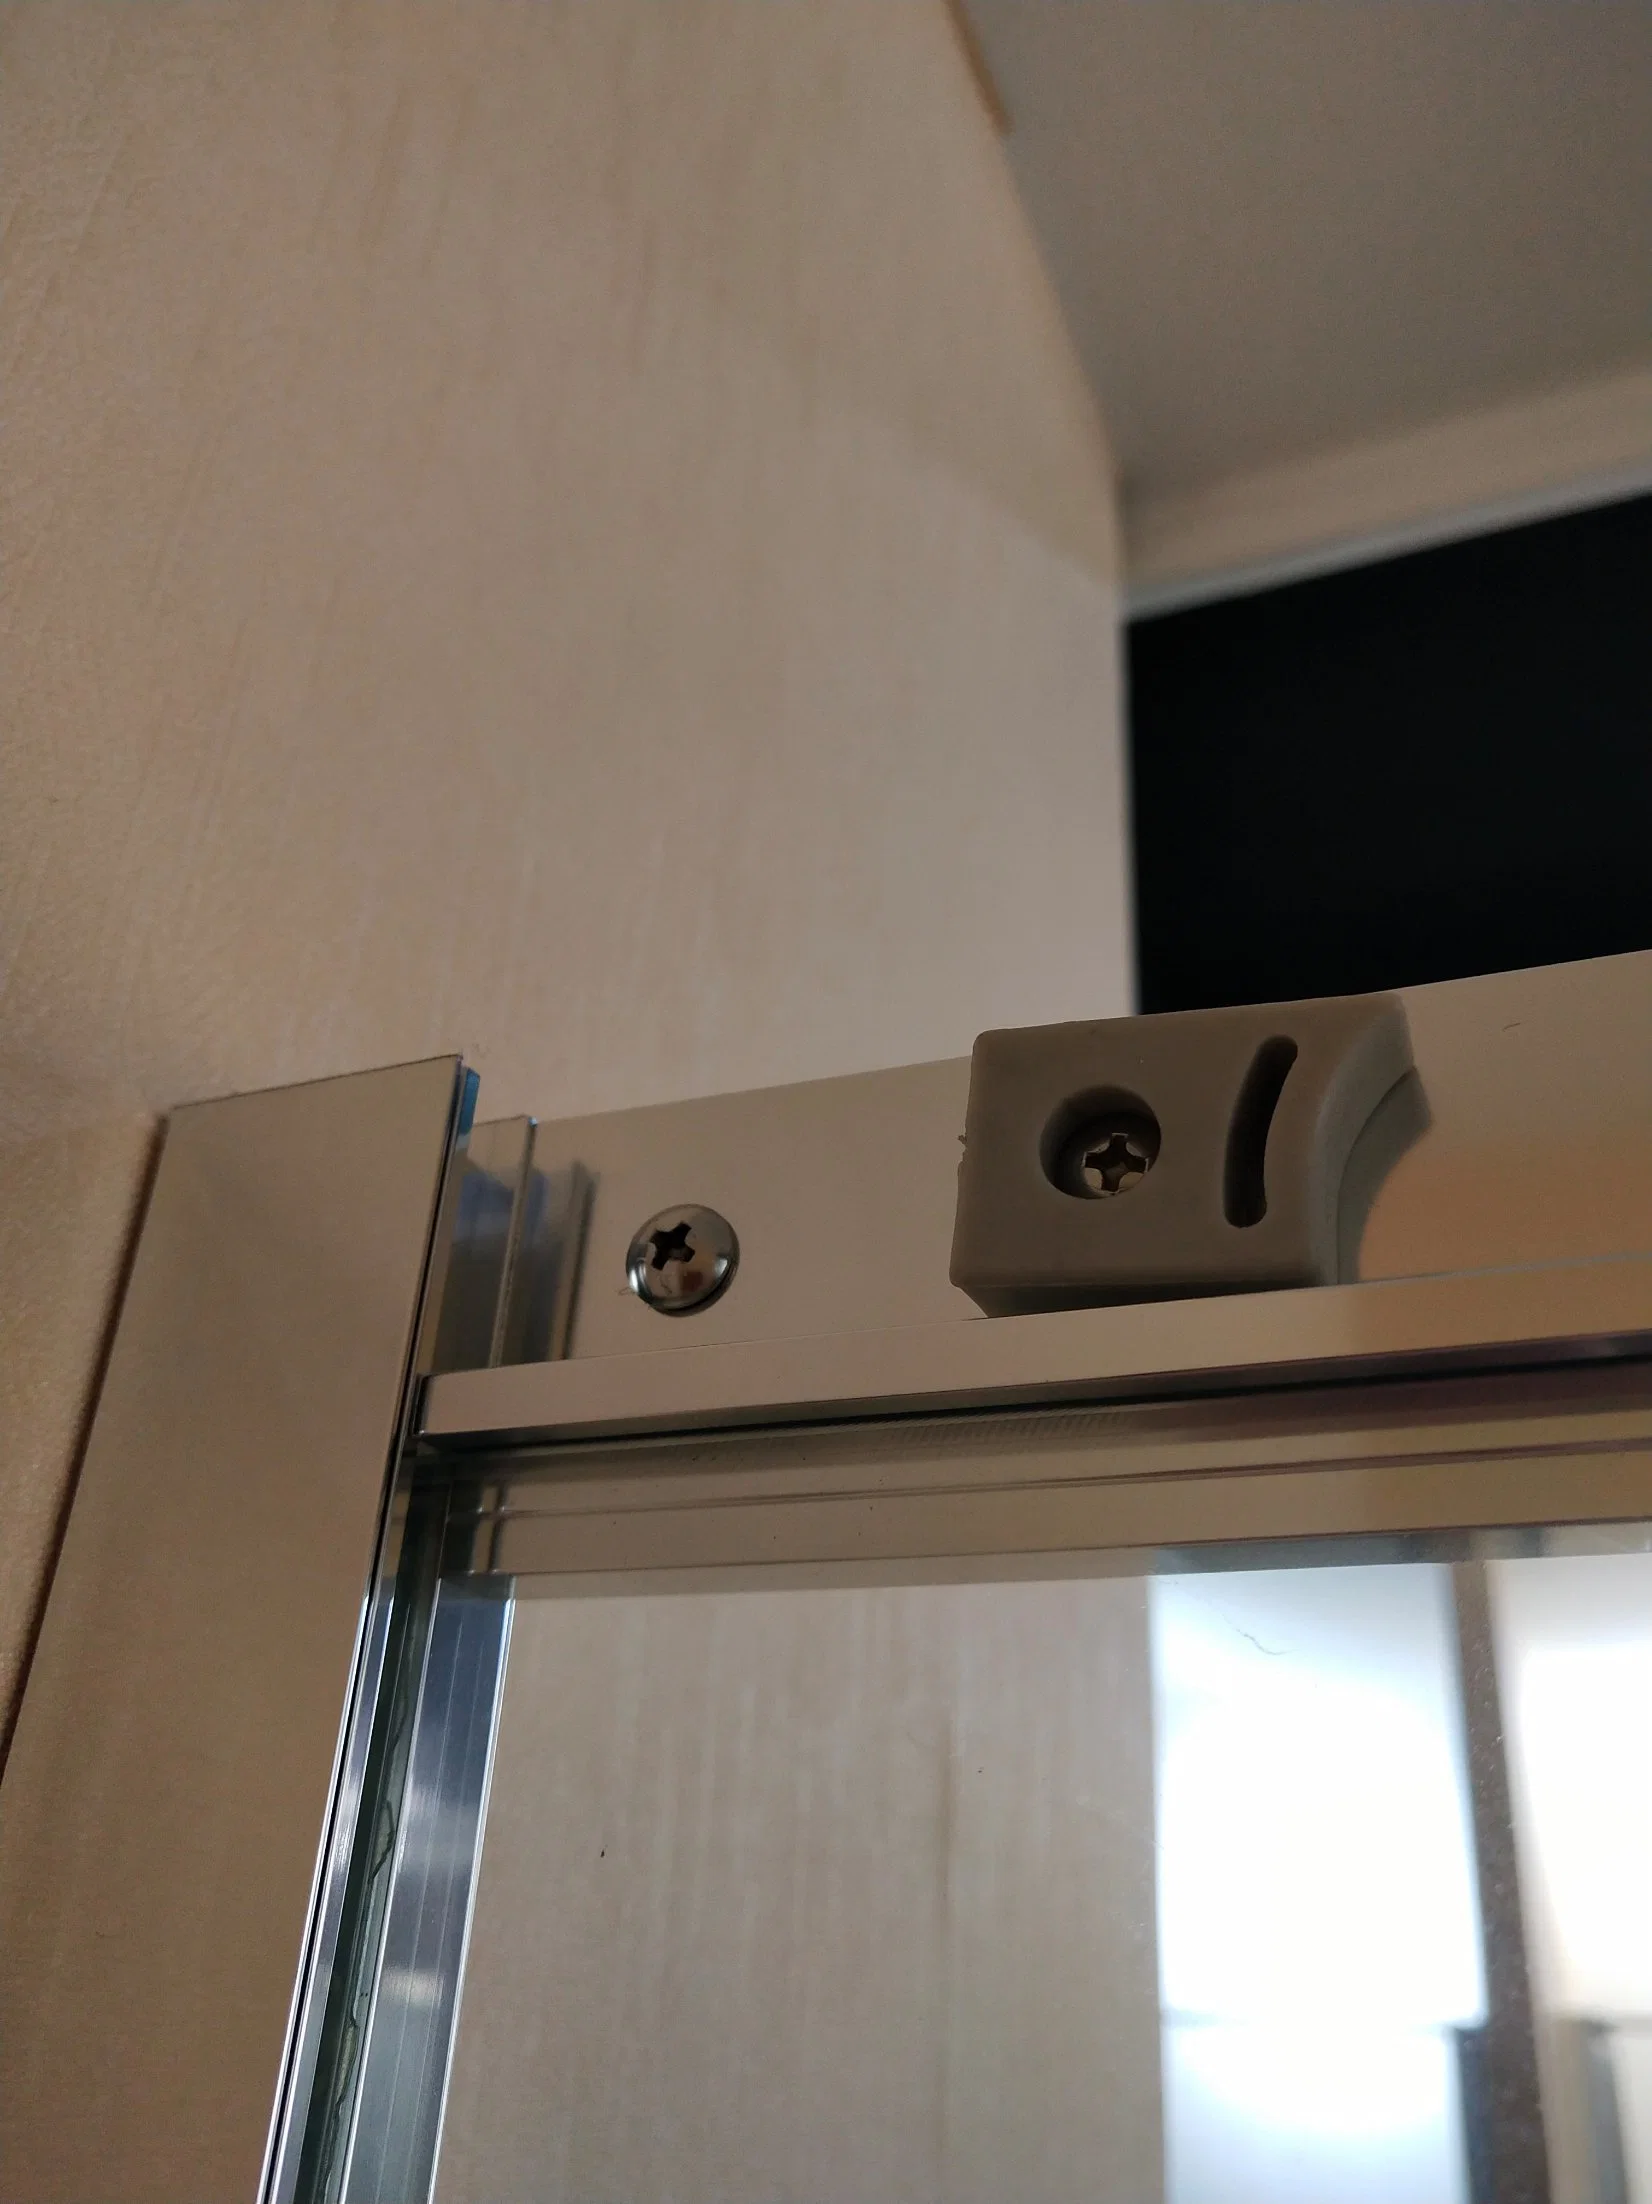 Perfil de aluminio para cabina de ducha con mango de plástico cromado